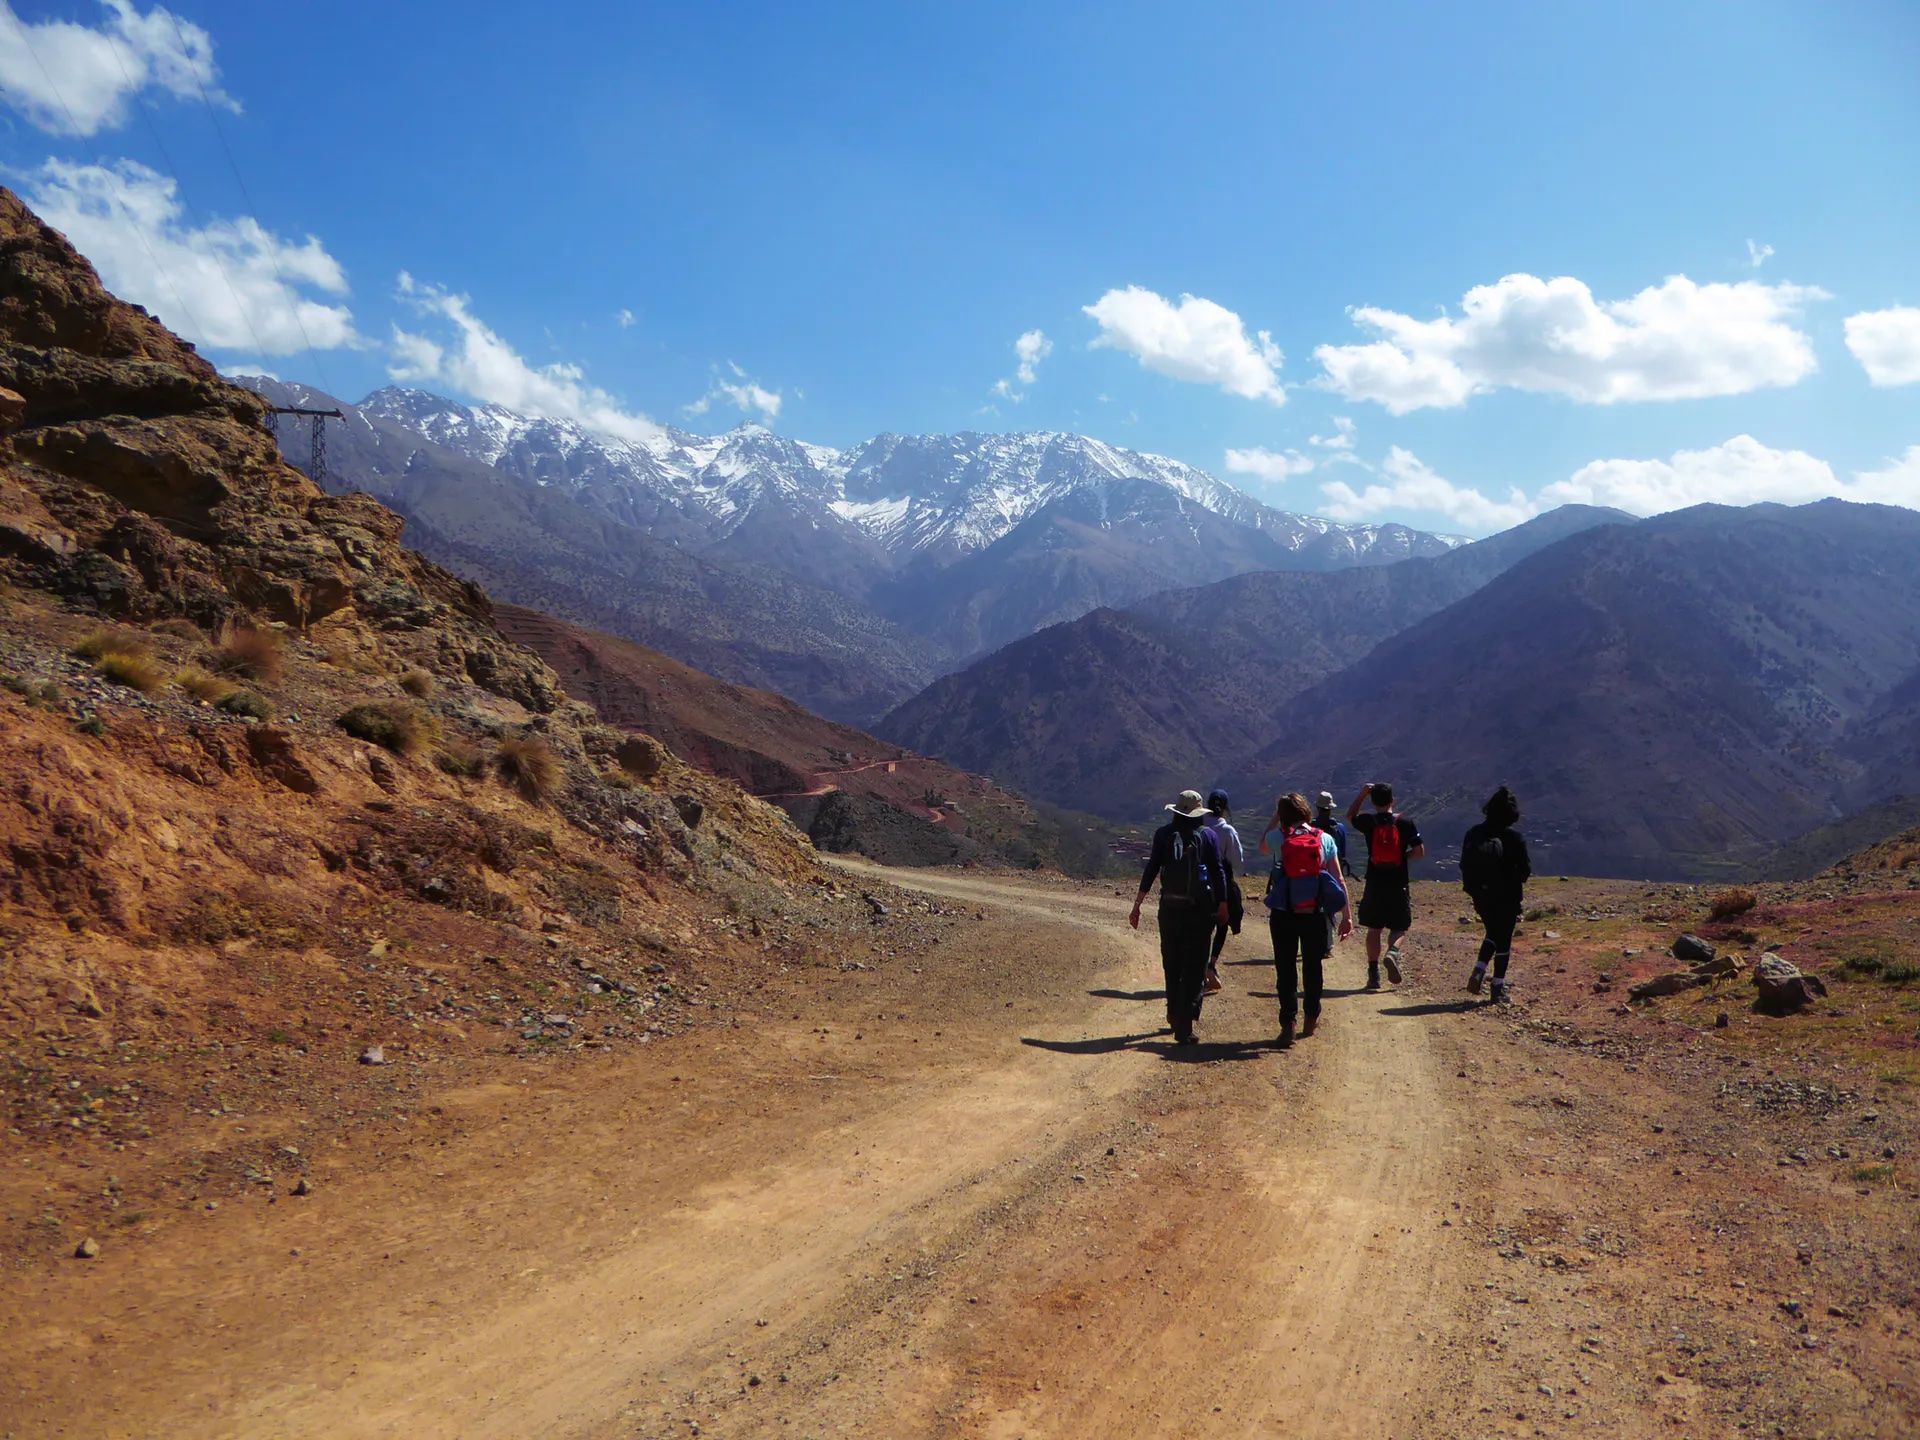 Trekkers in Morocco's Atlas Mountains.